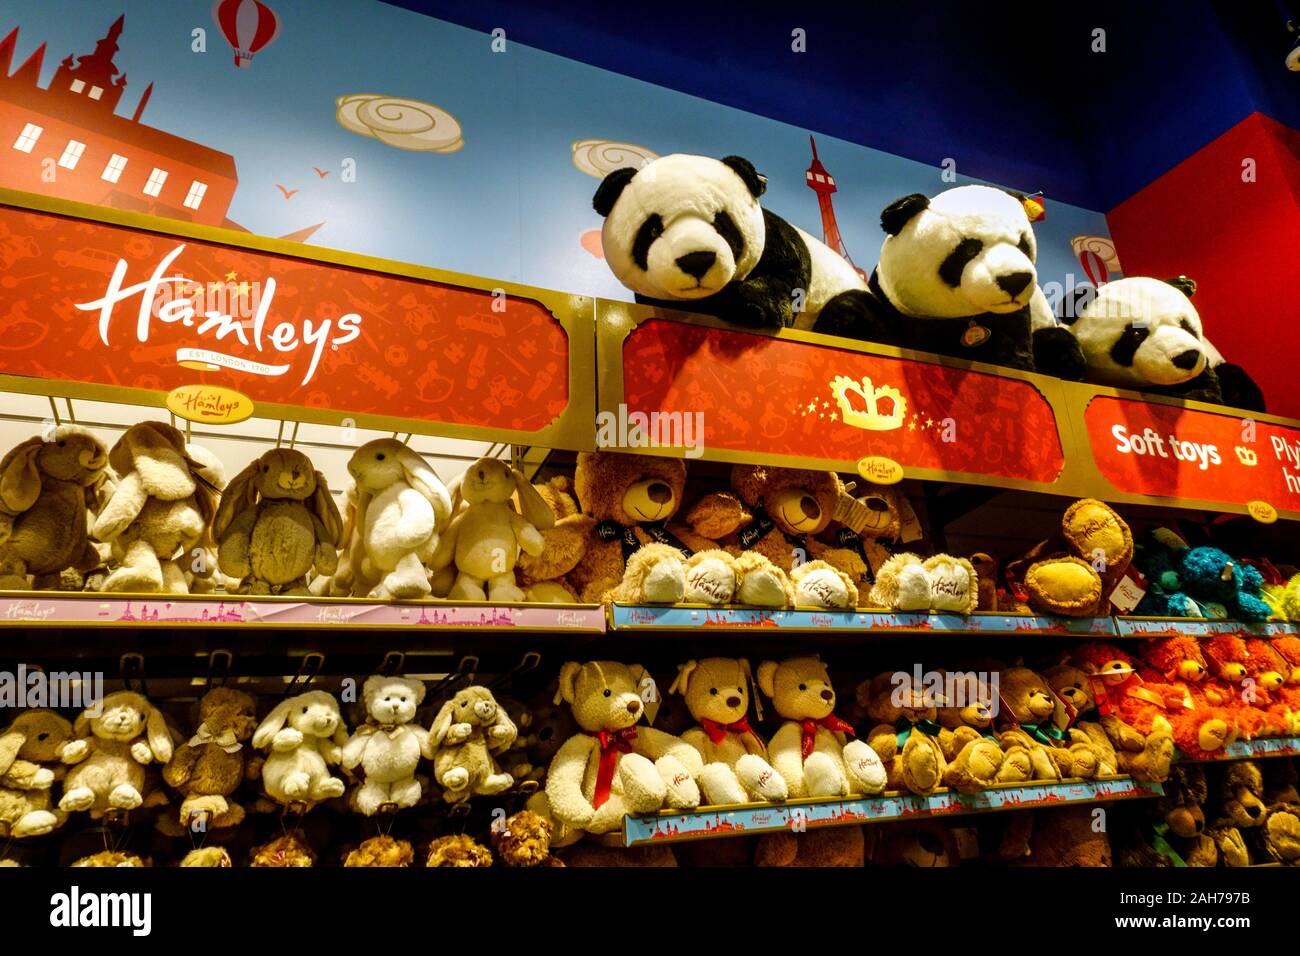 Hamleys toy shop, toys in shelves, interior Prague Czech Republic Stock  Photo - Alamy